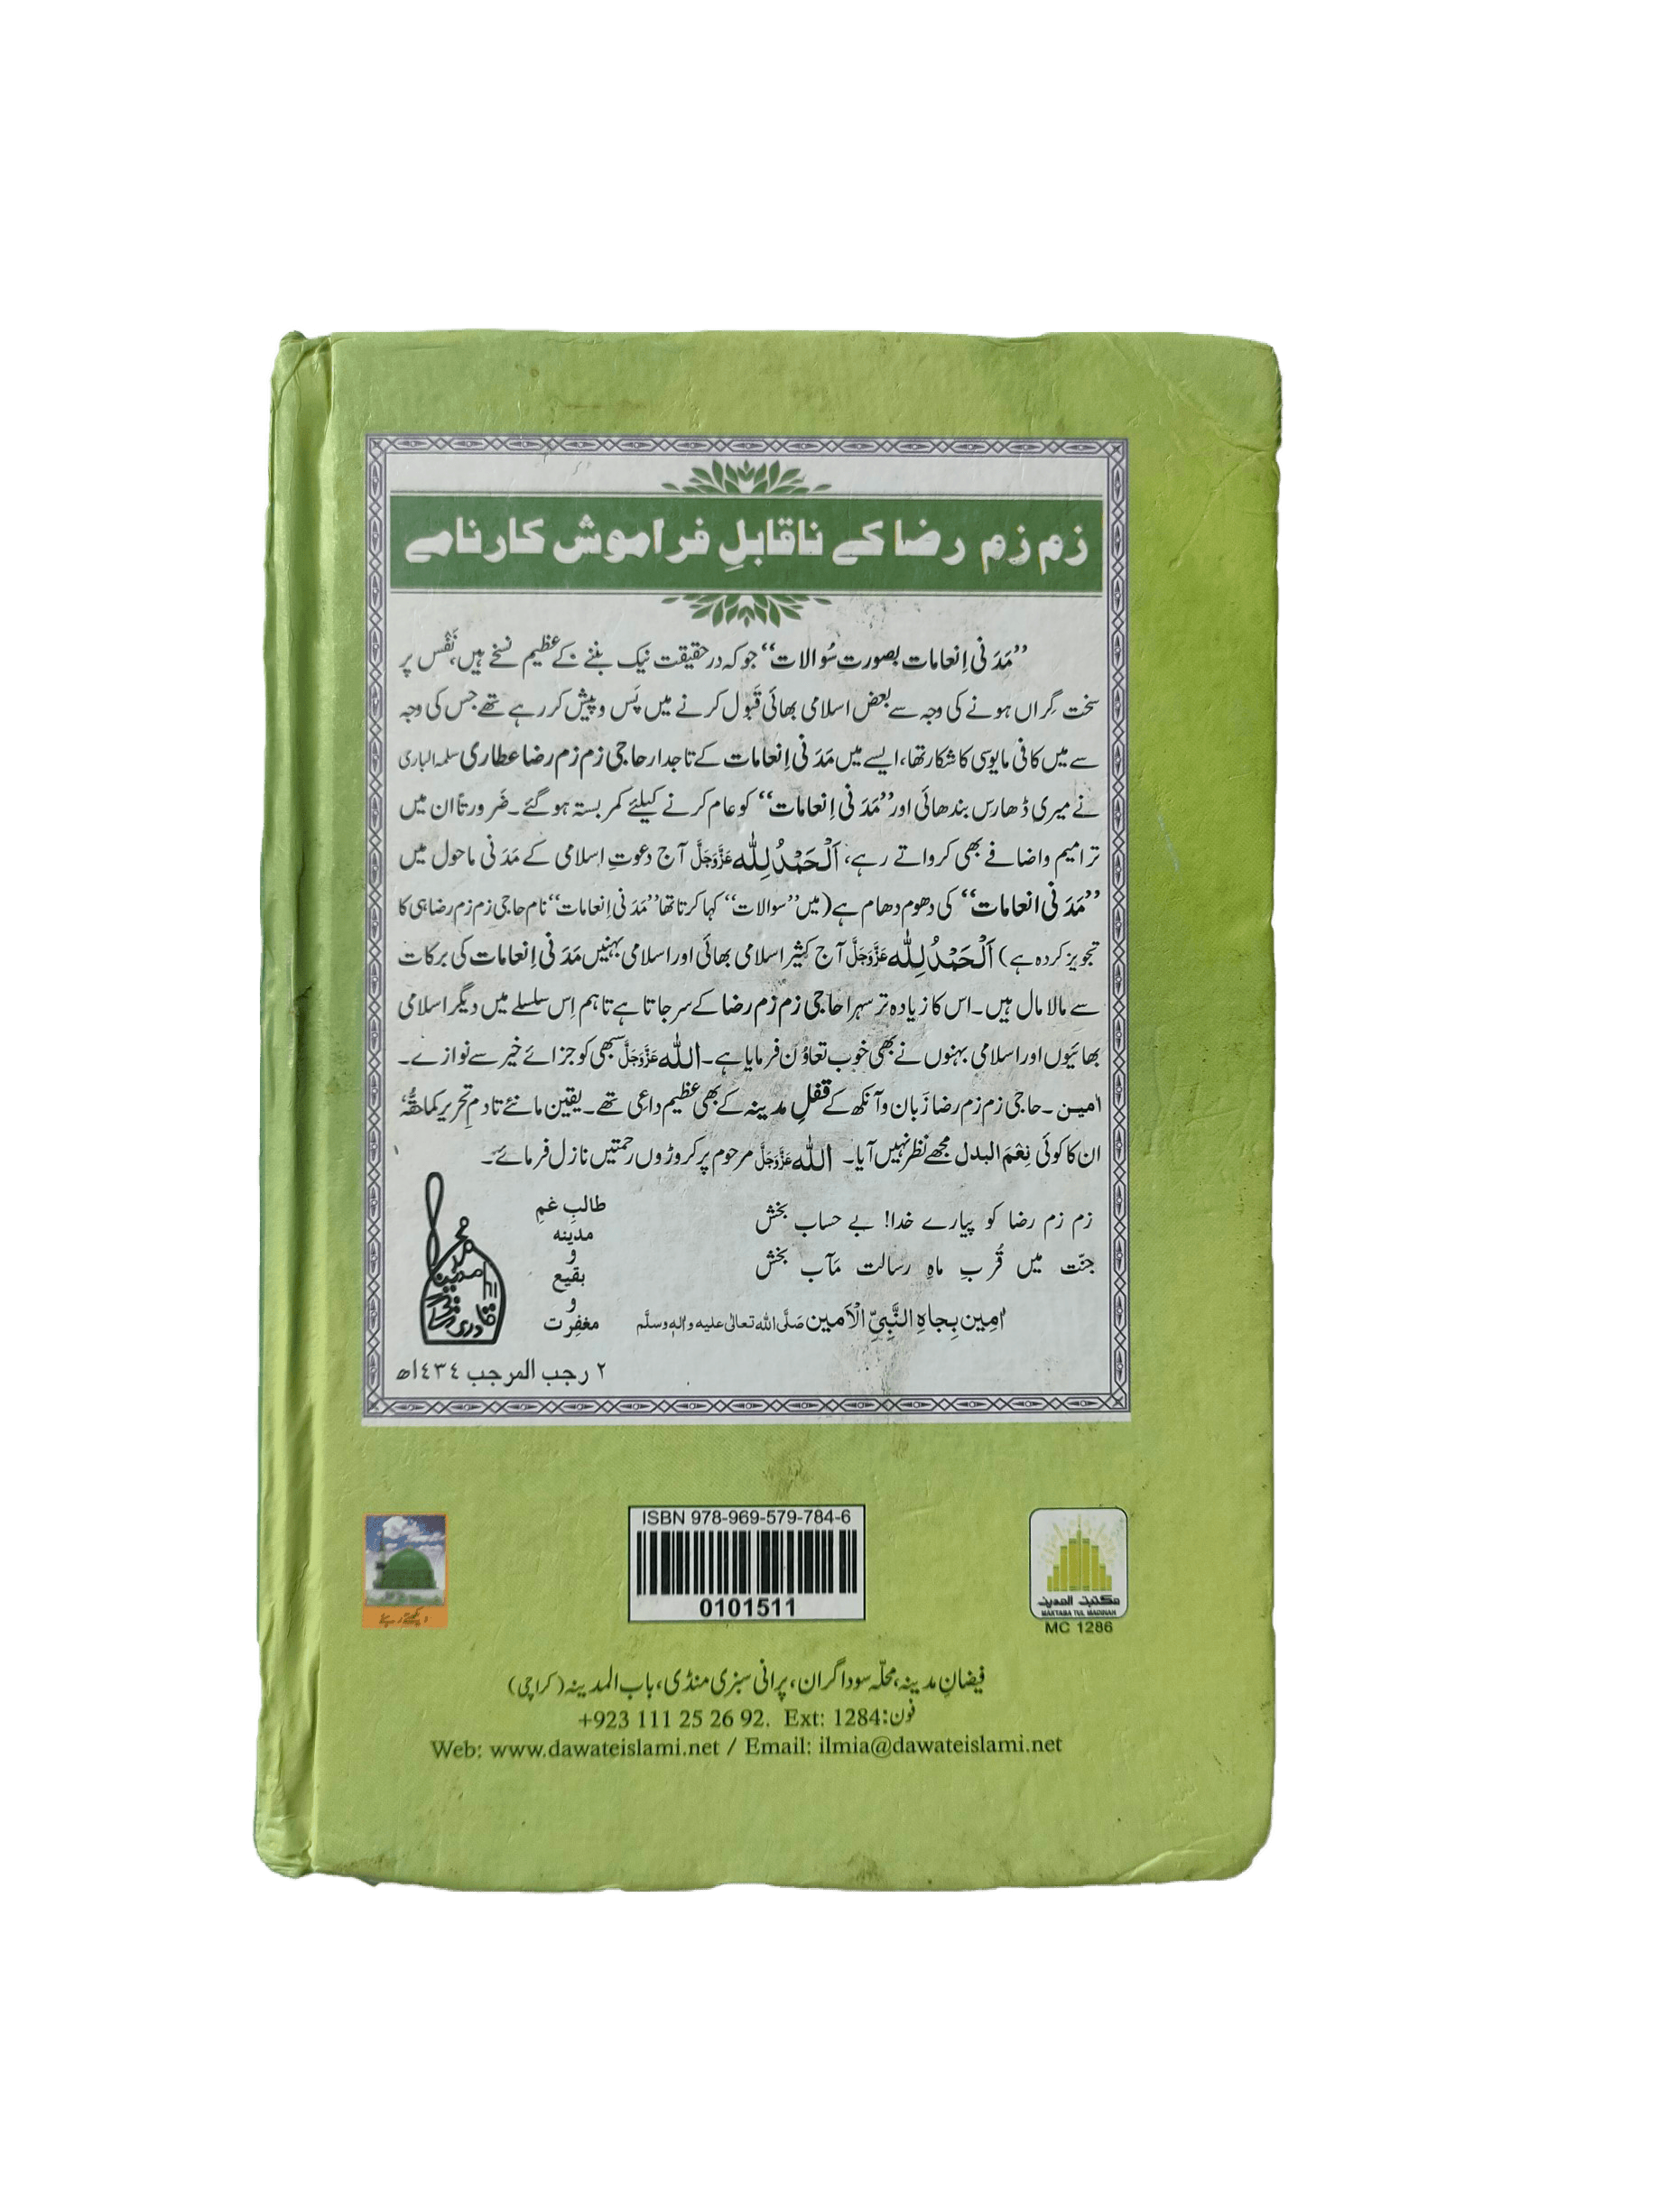 Mehboob Attar Ki 122 Hikayatain (122 Tales of Mehboob Attar) - KHAJISTAN™